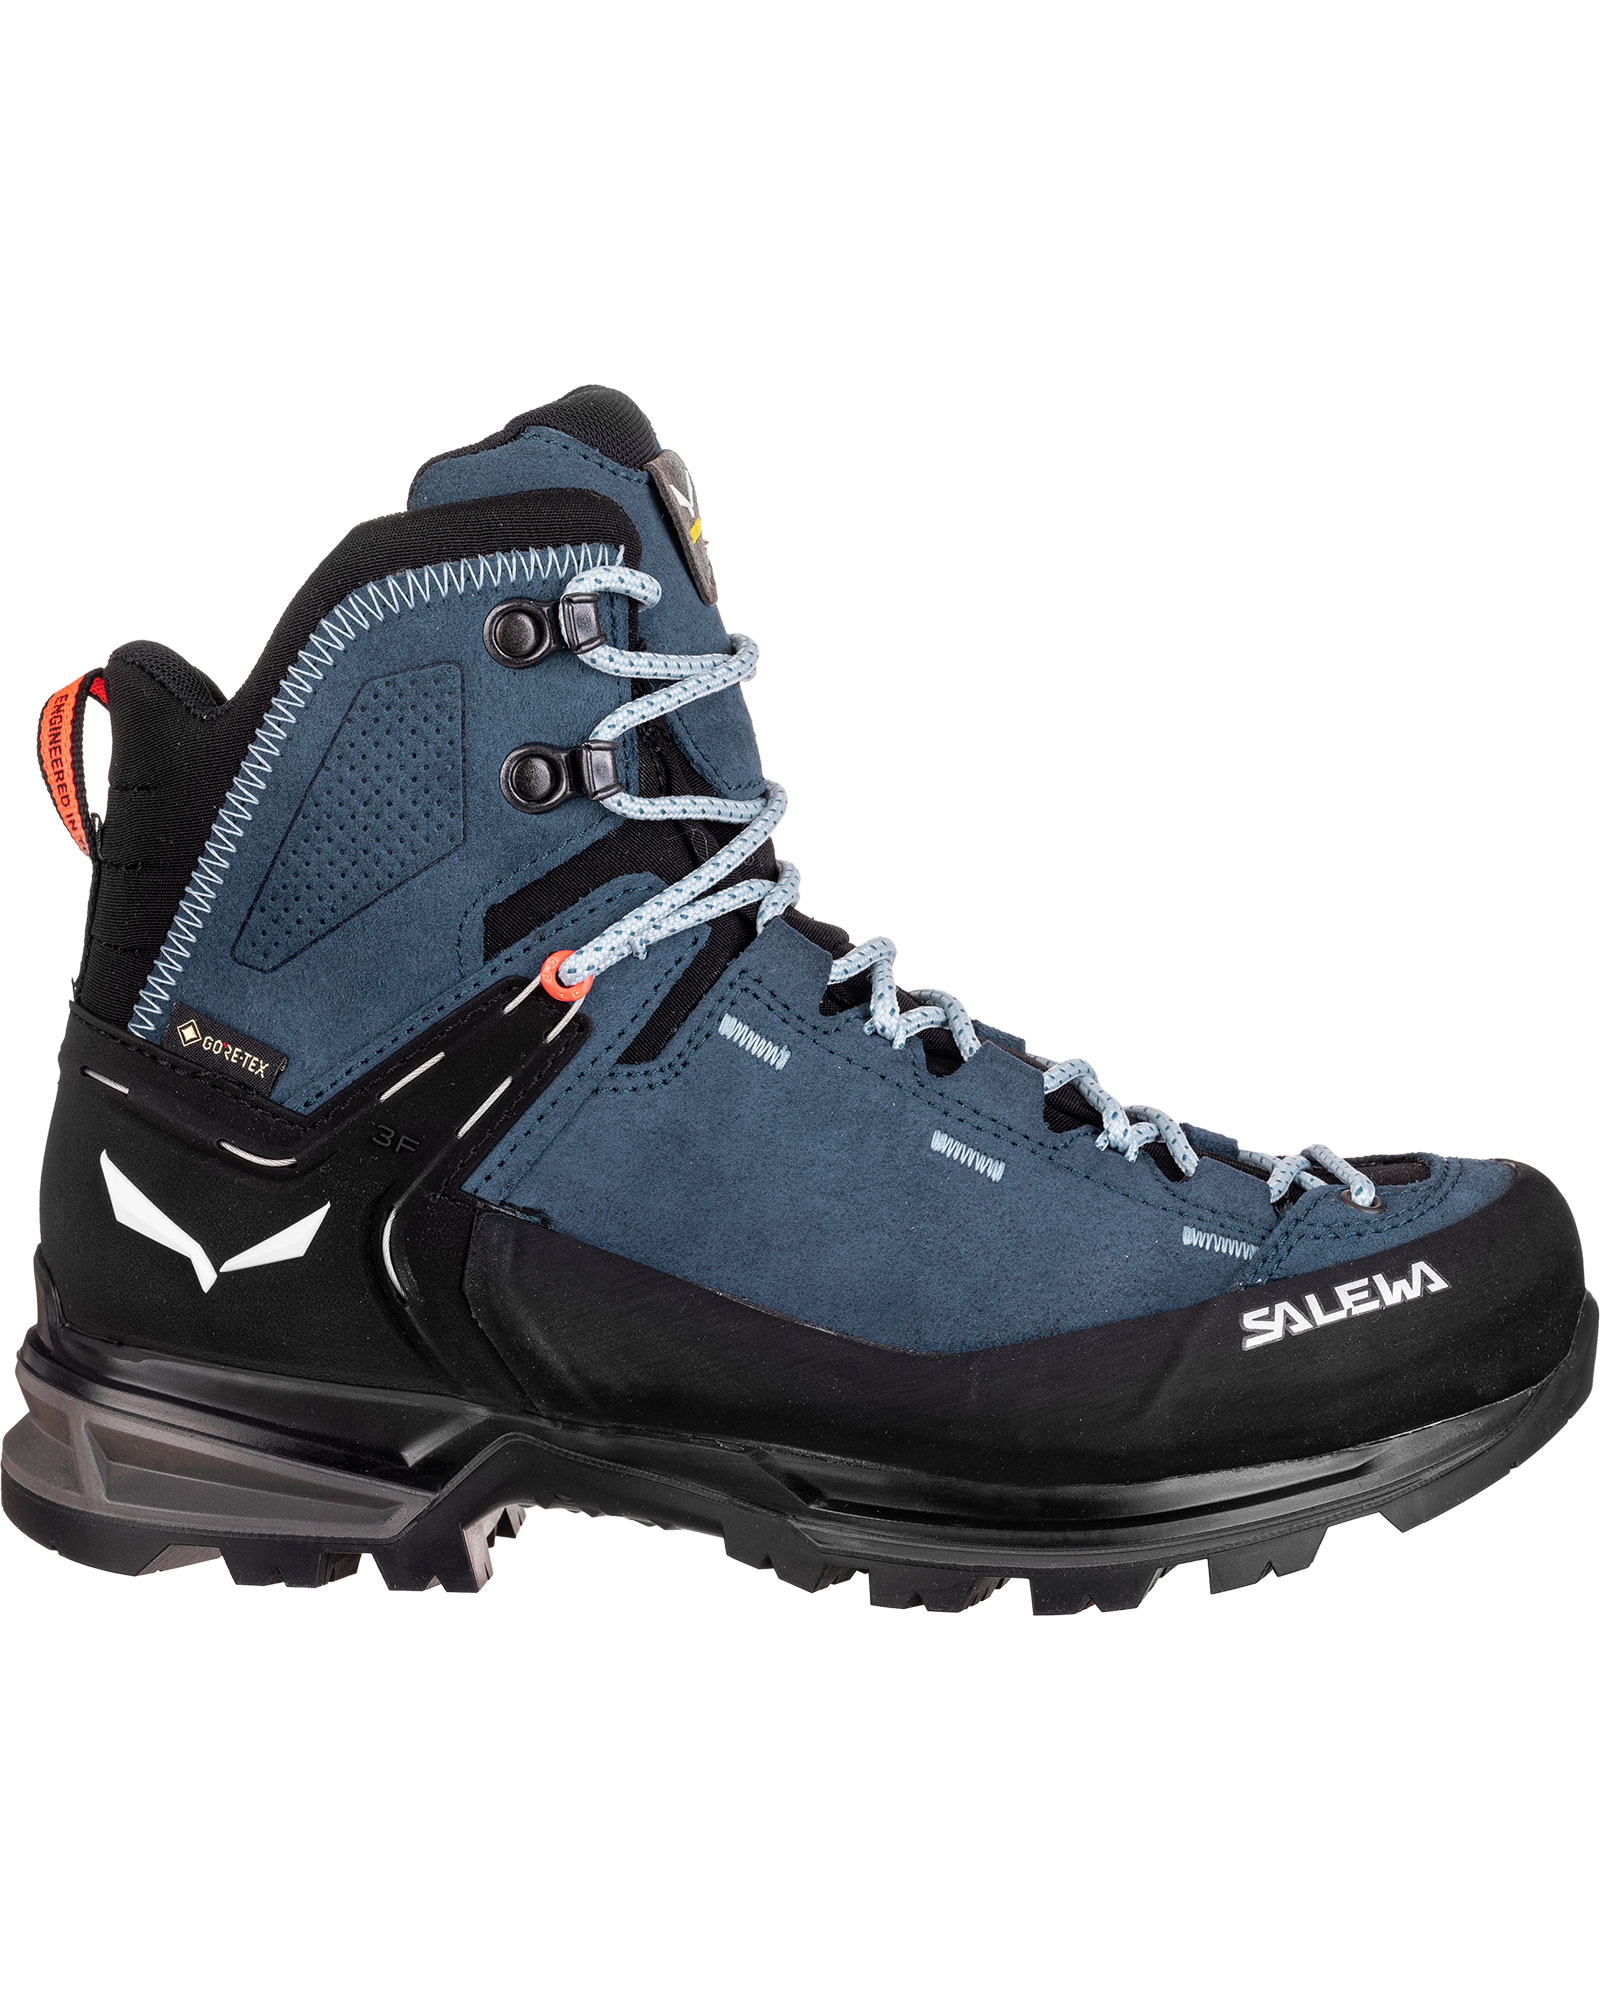 Salewa Mountain Trainer 2 Mid GORE TEX Women’s Boots - Dark Denim UK 6.5